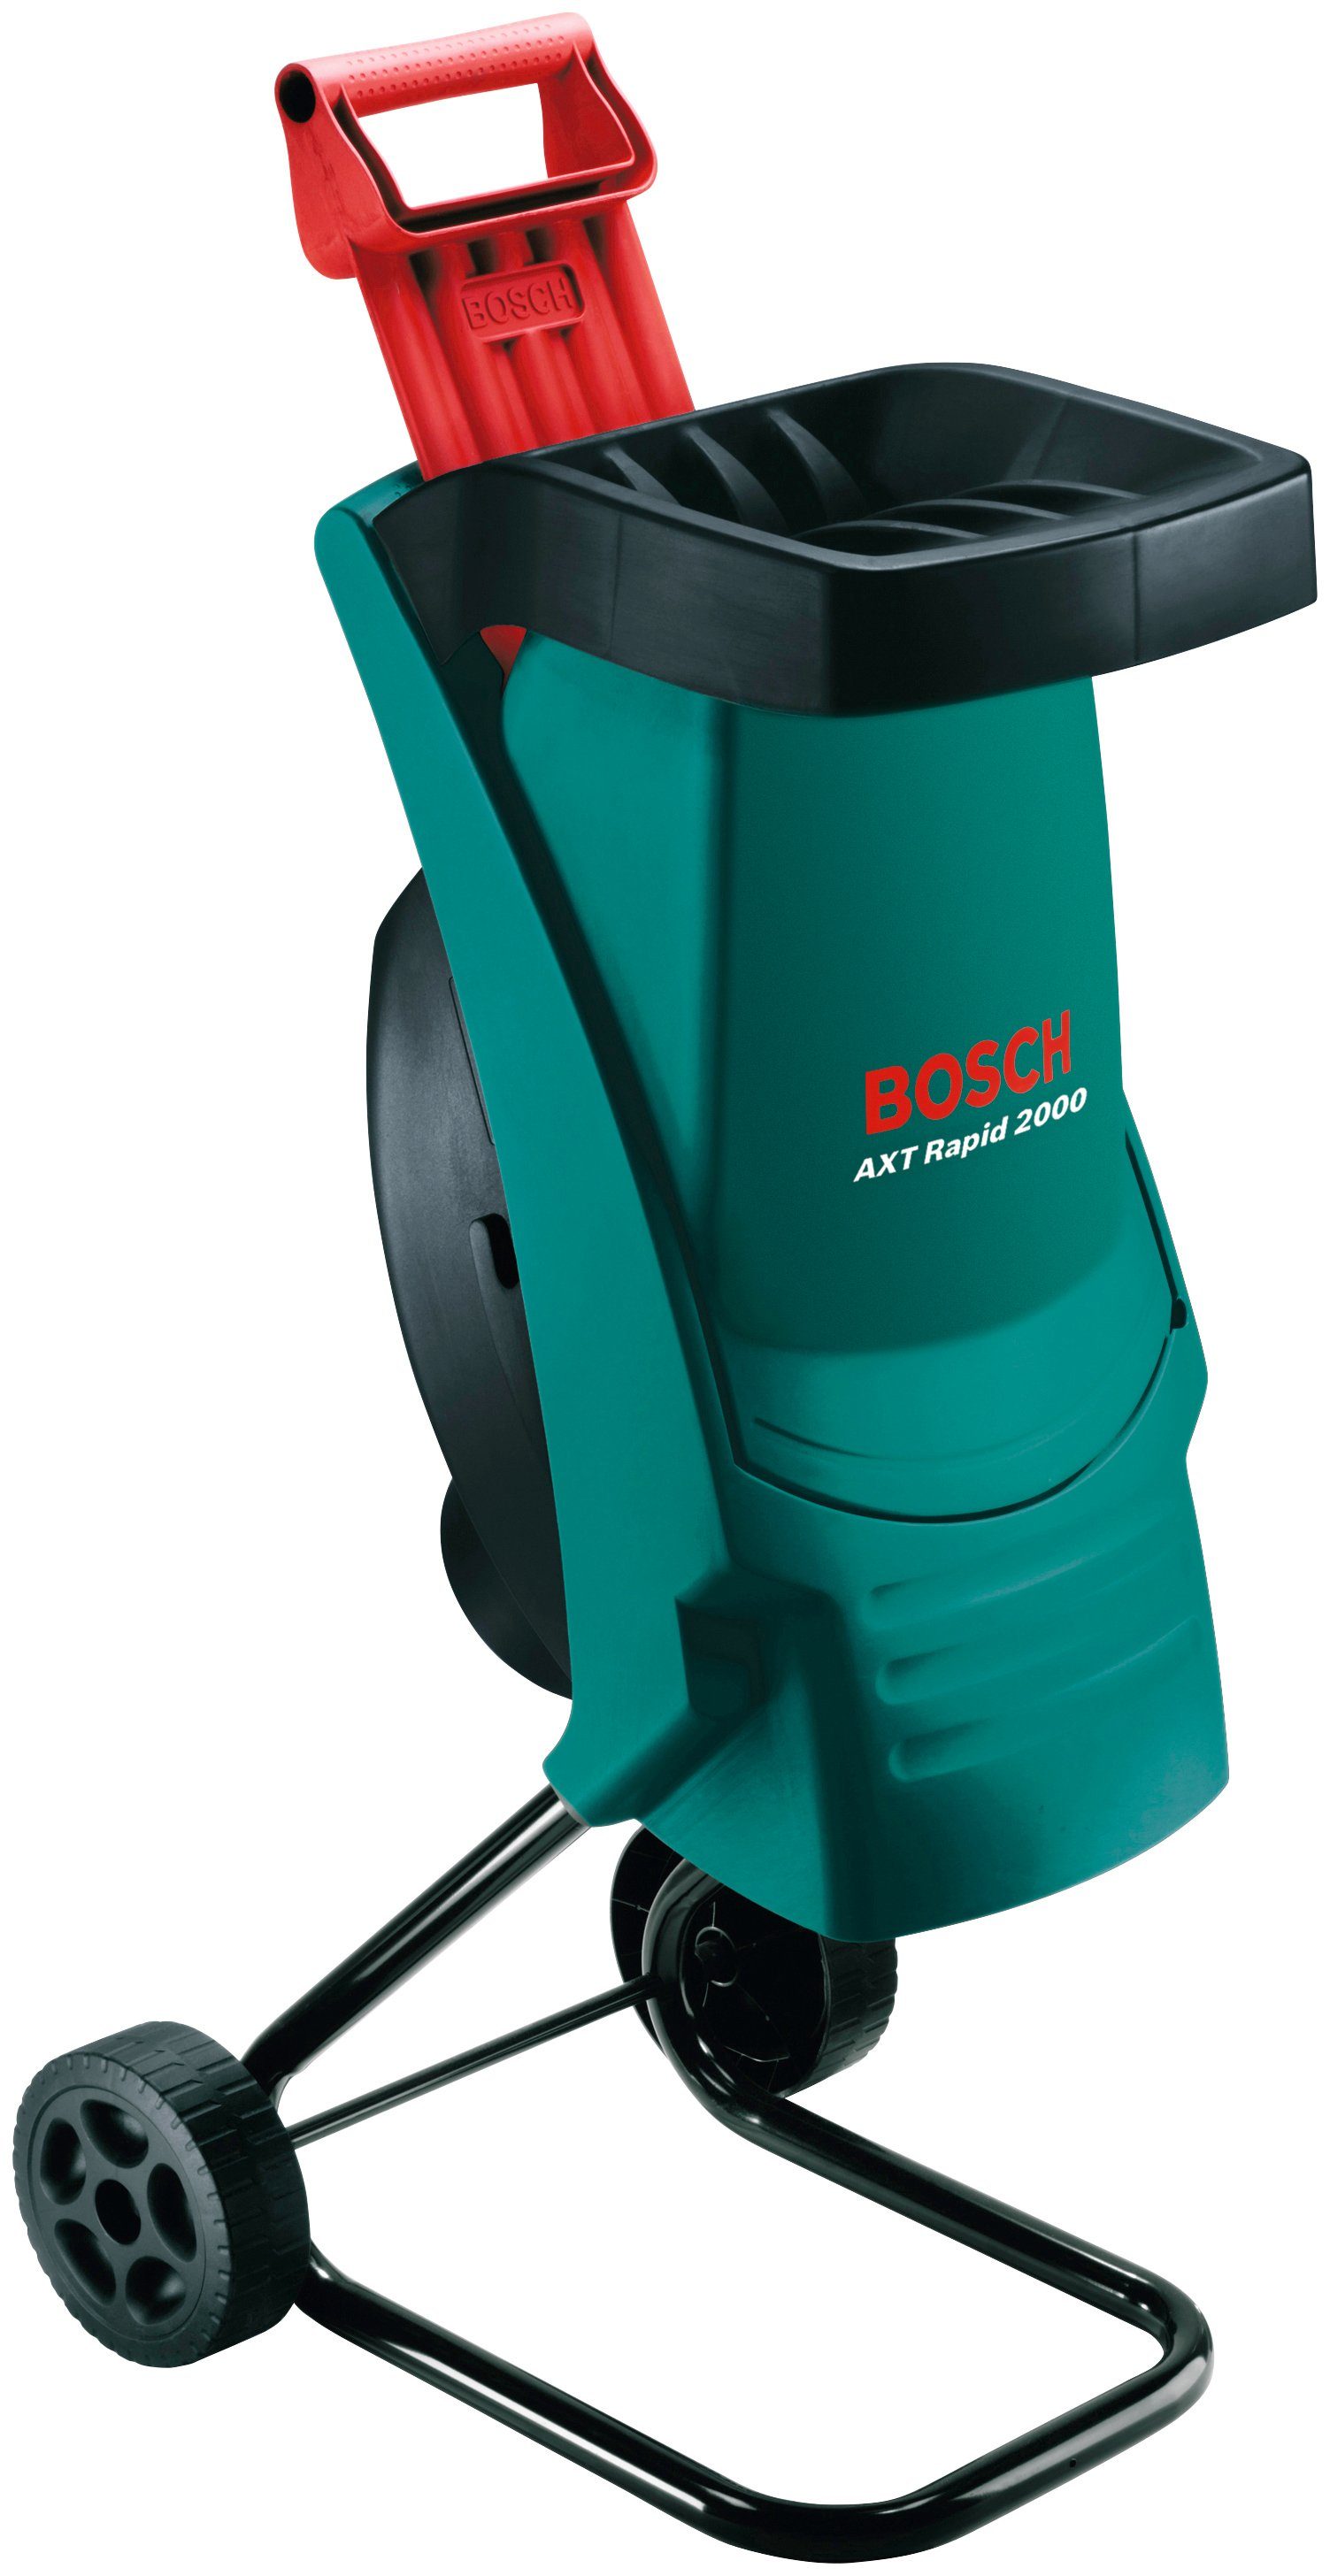 Bosch Home & Garden Messerhäcksler AXT Rapid 2000, 3,5 cm max.  Astdurchmesser, Leistung/Spannung: 2.000 Watt